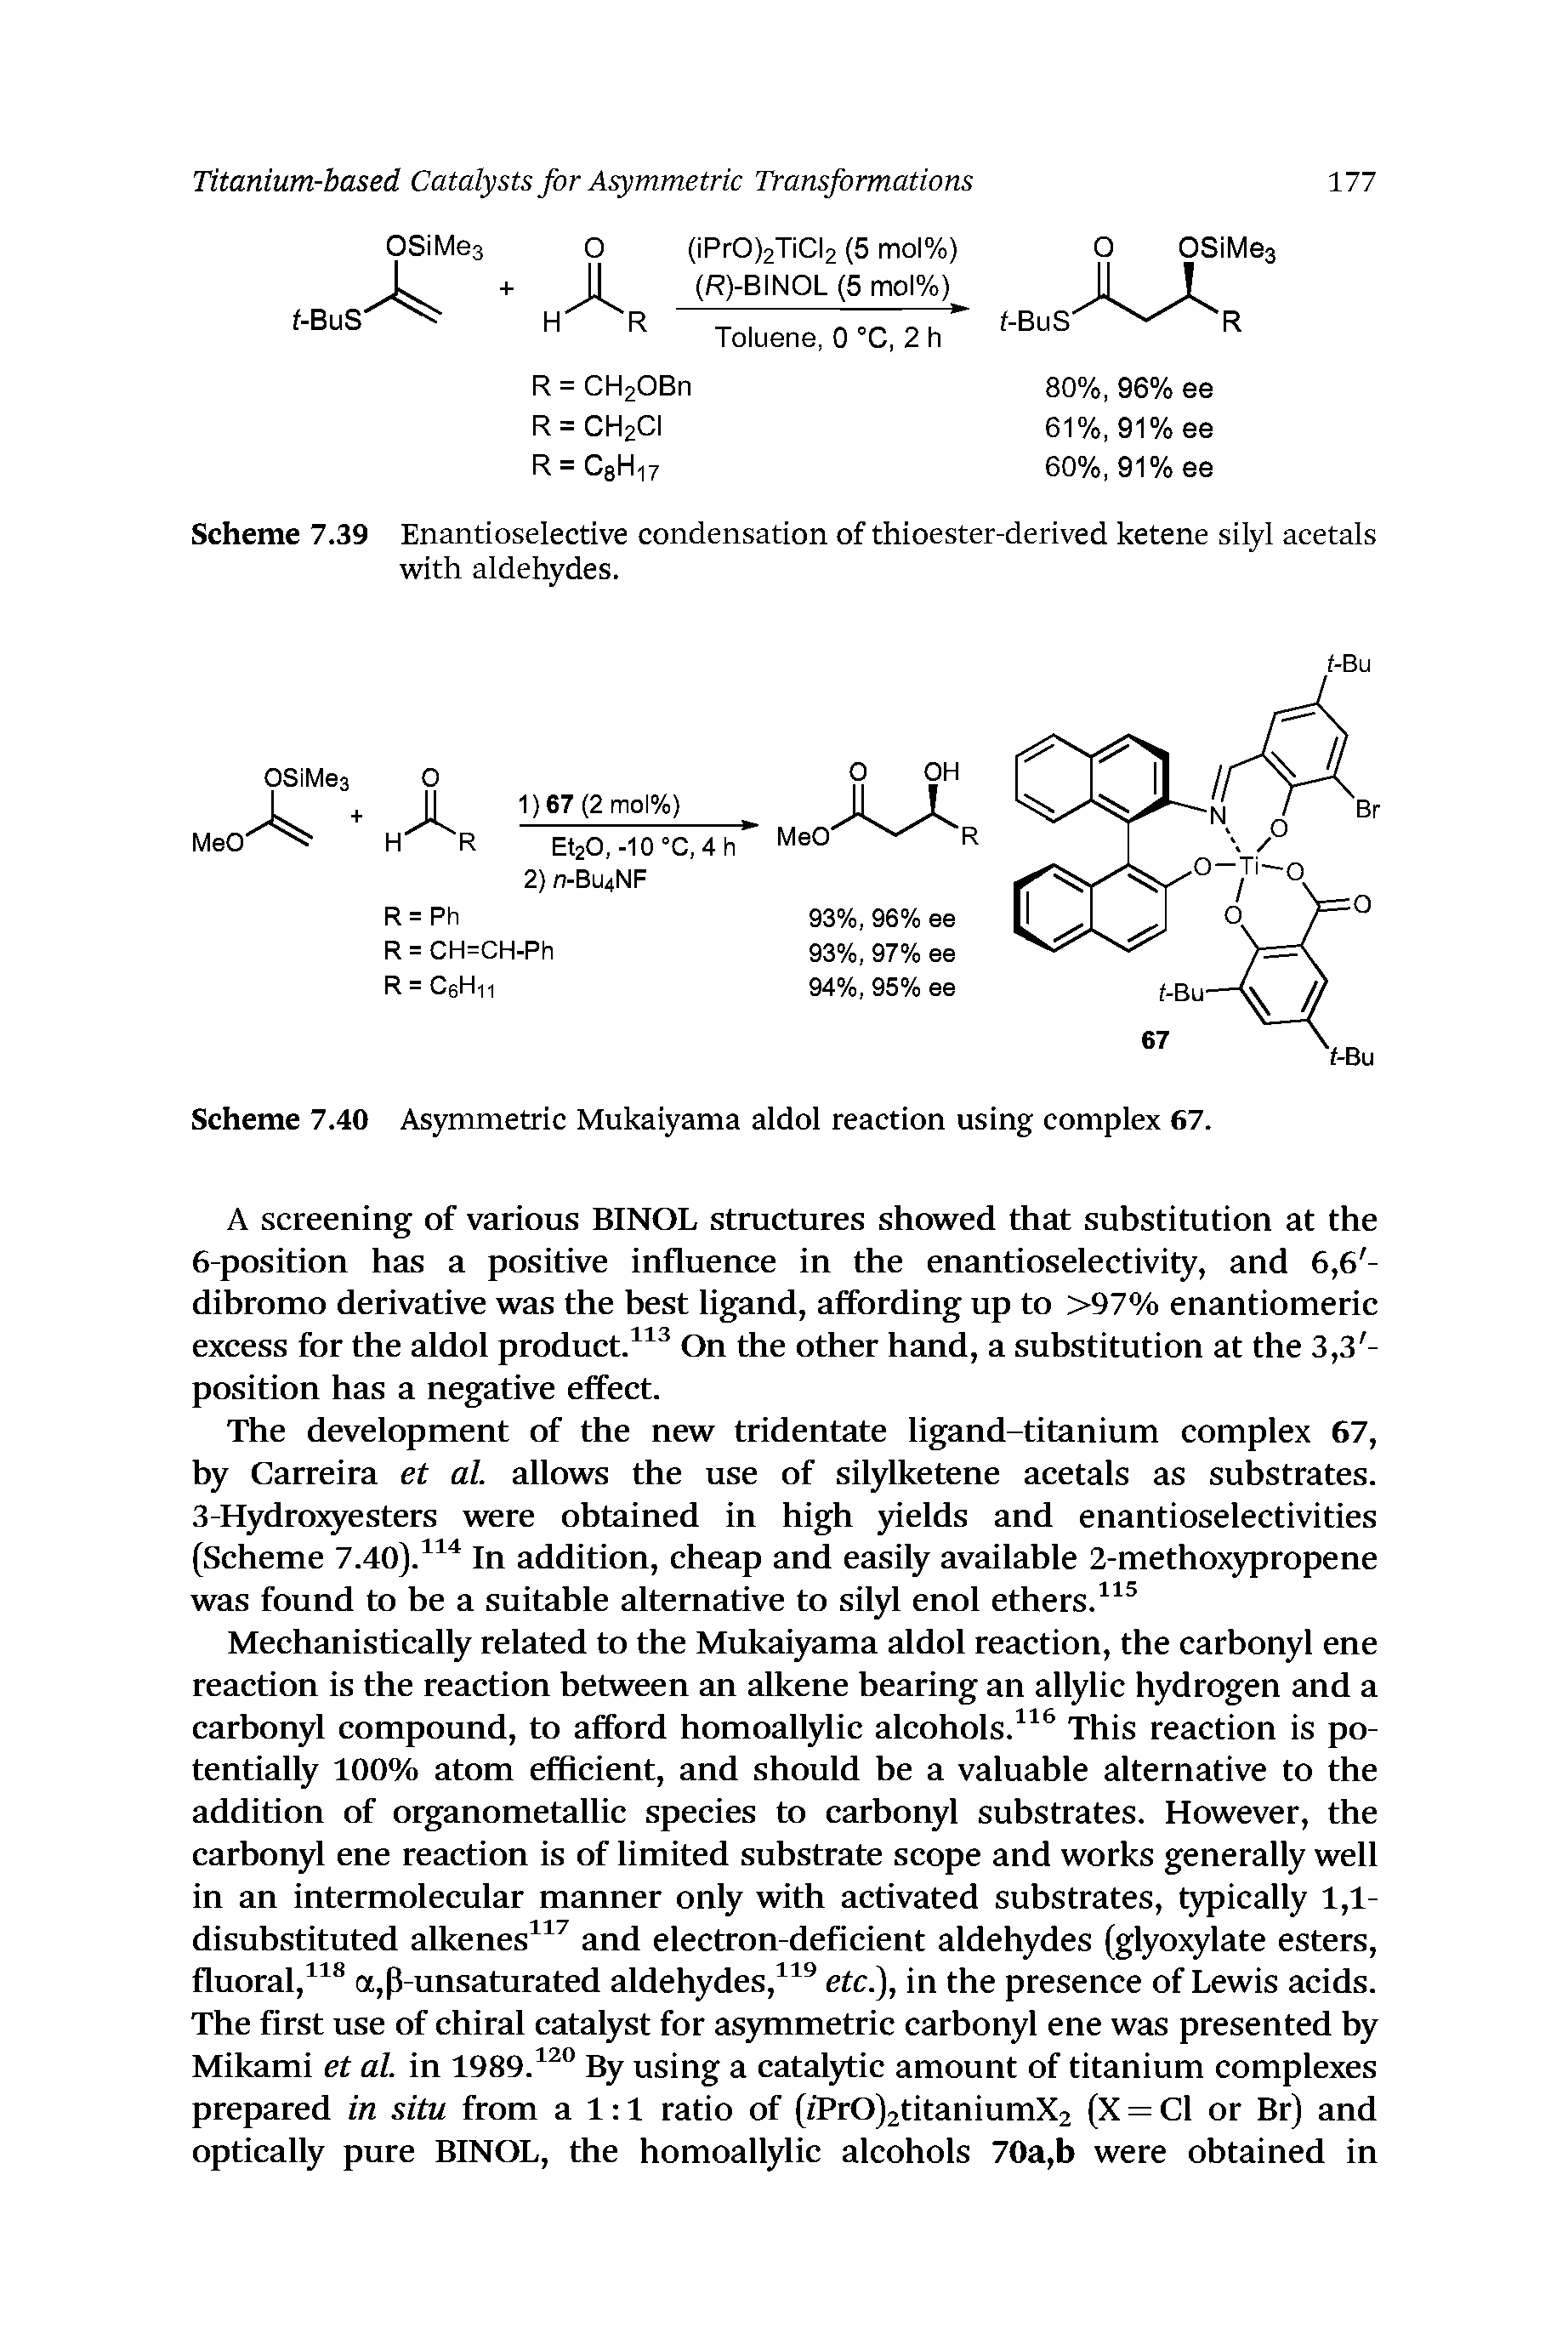 Scheme 7.39 Enantioselective condensation of thioester-derived ketene silyl acetals with aldehydes.